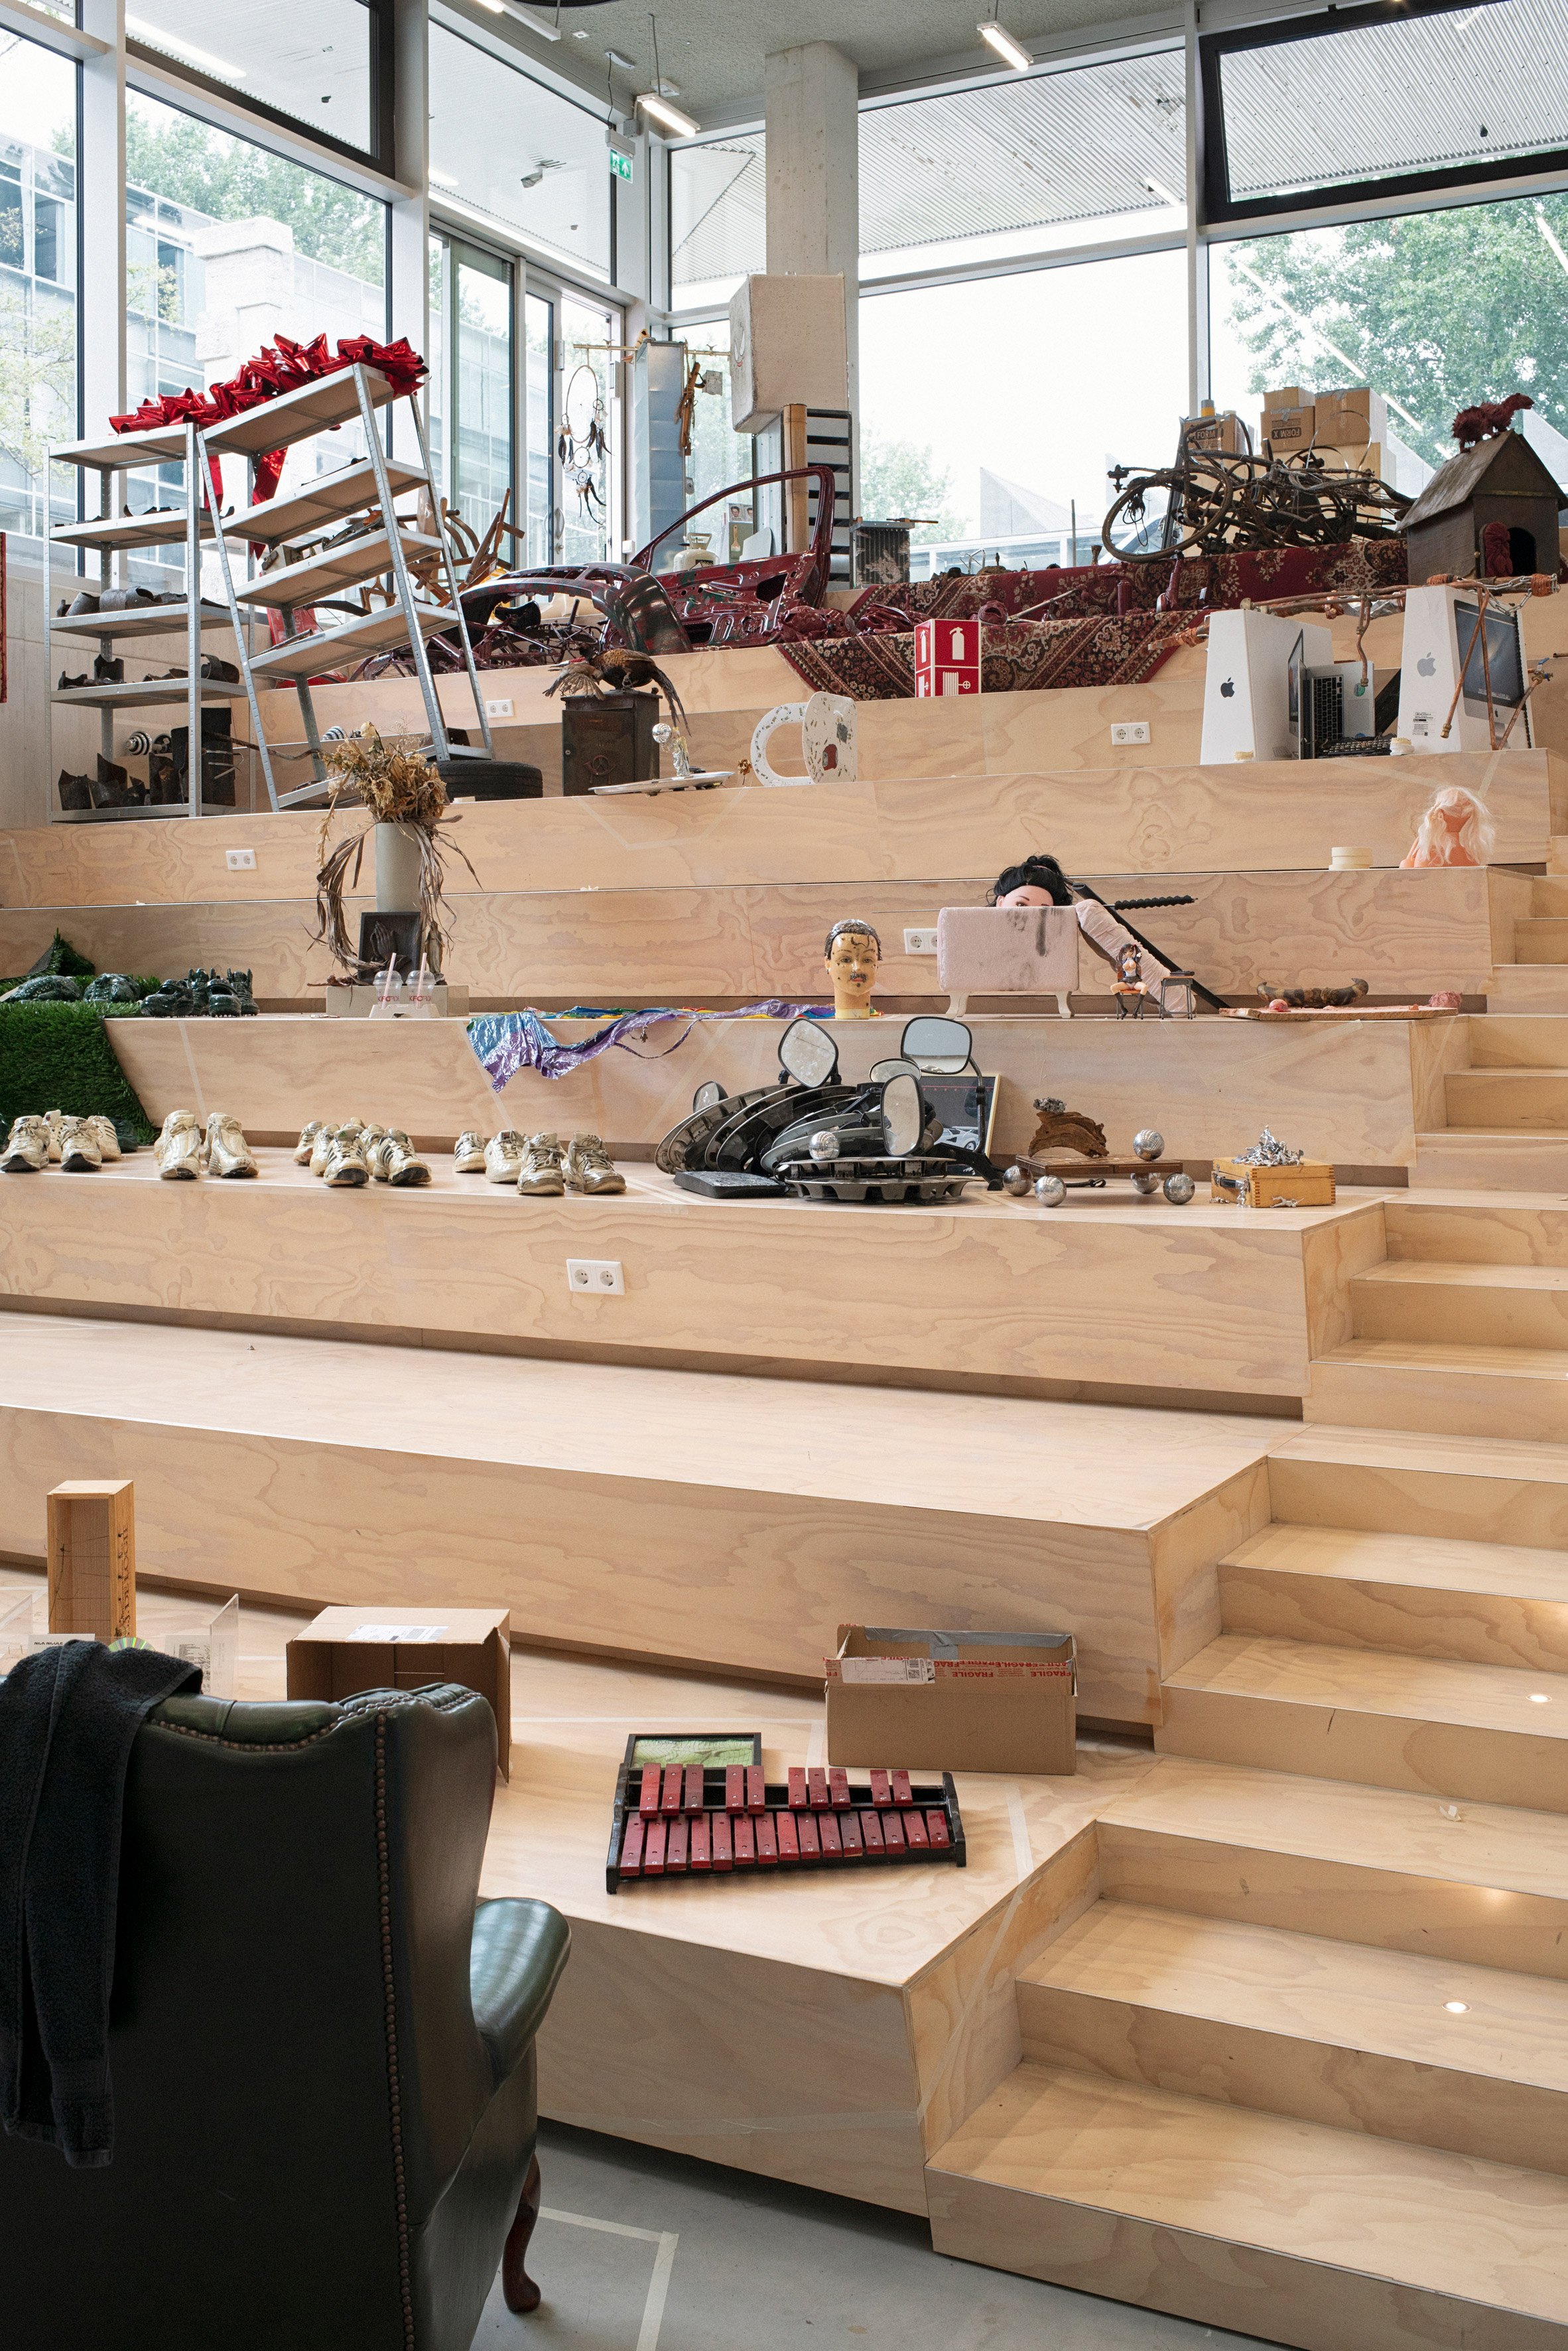 Gerrit Rietveld Academy by Studio Paulien Bremmer and Hootsmans Architecten